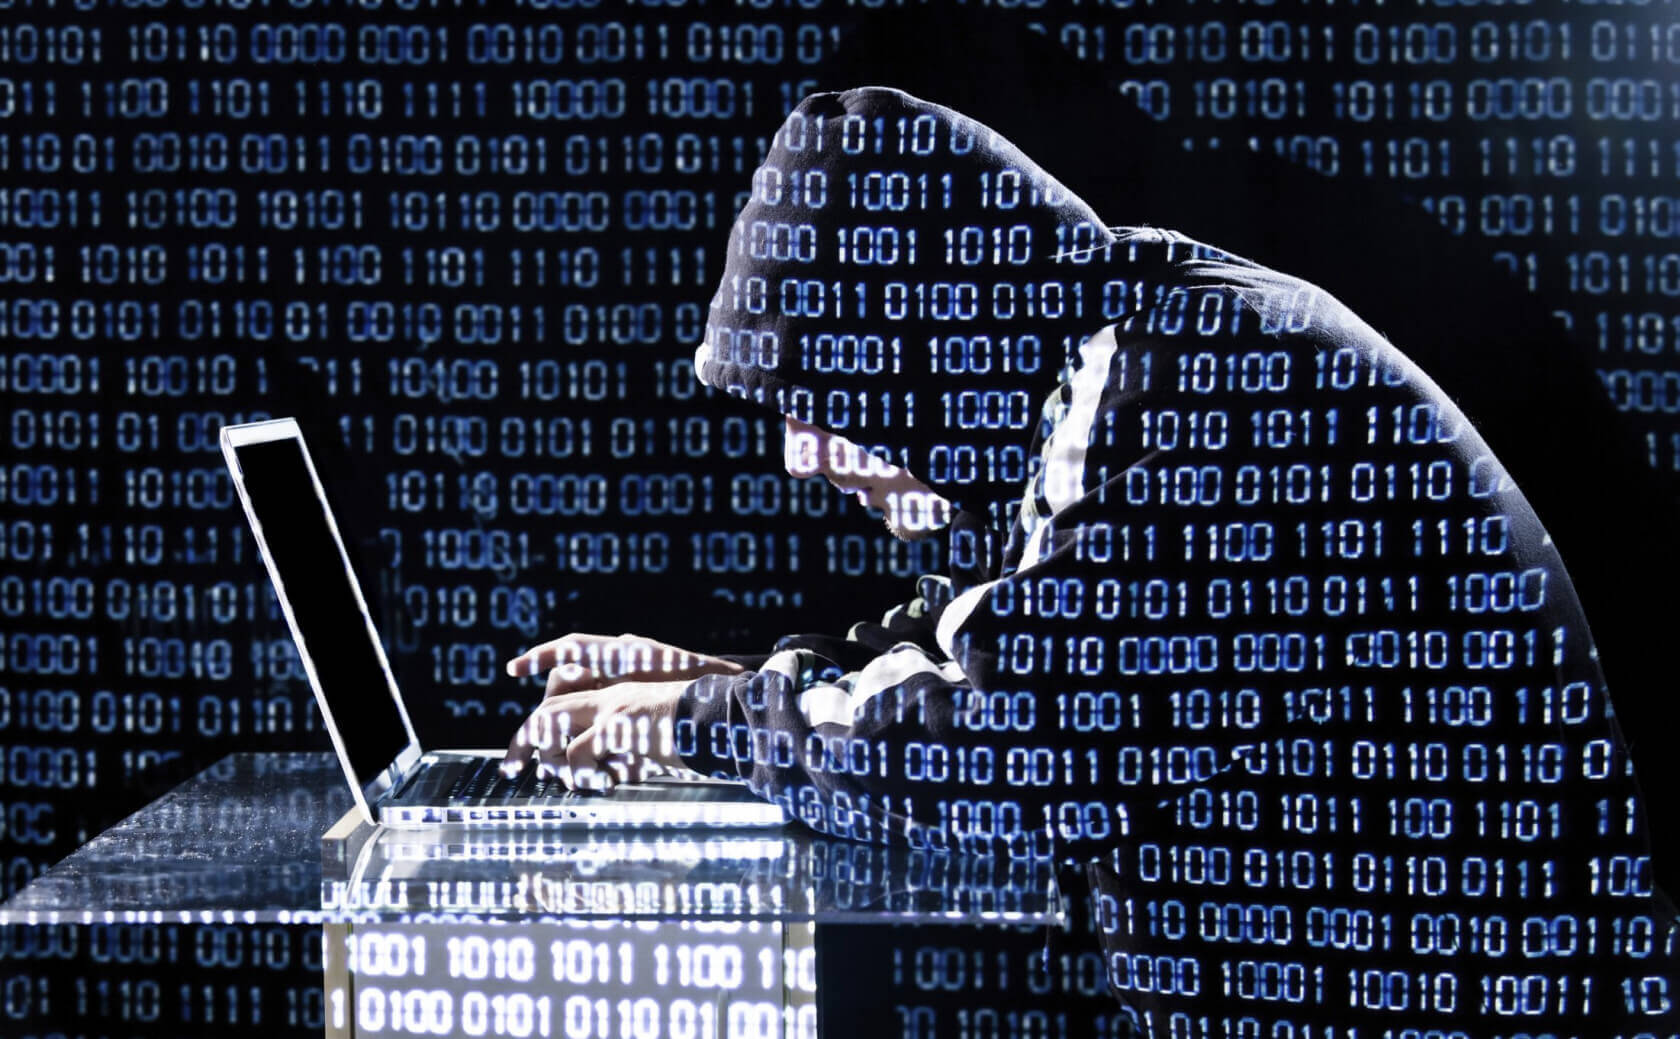 Dutch DDoS hacker is spared jail time